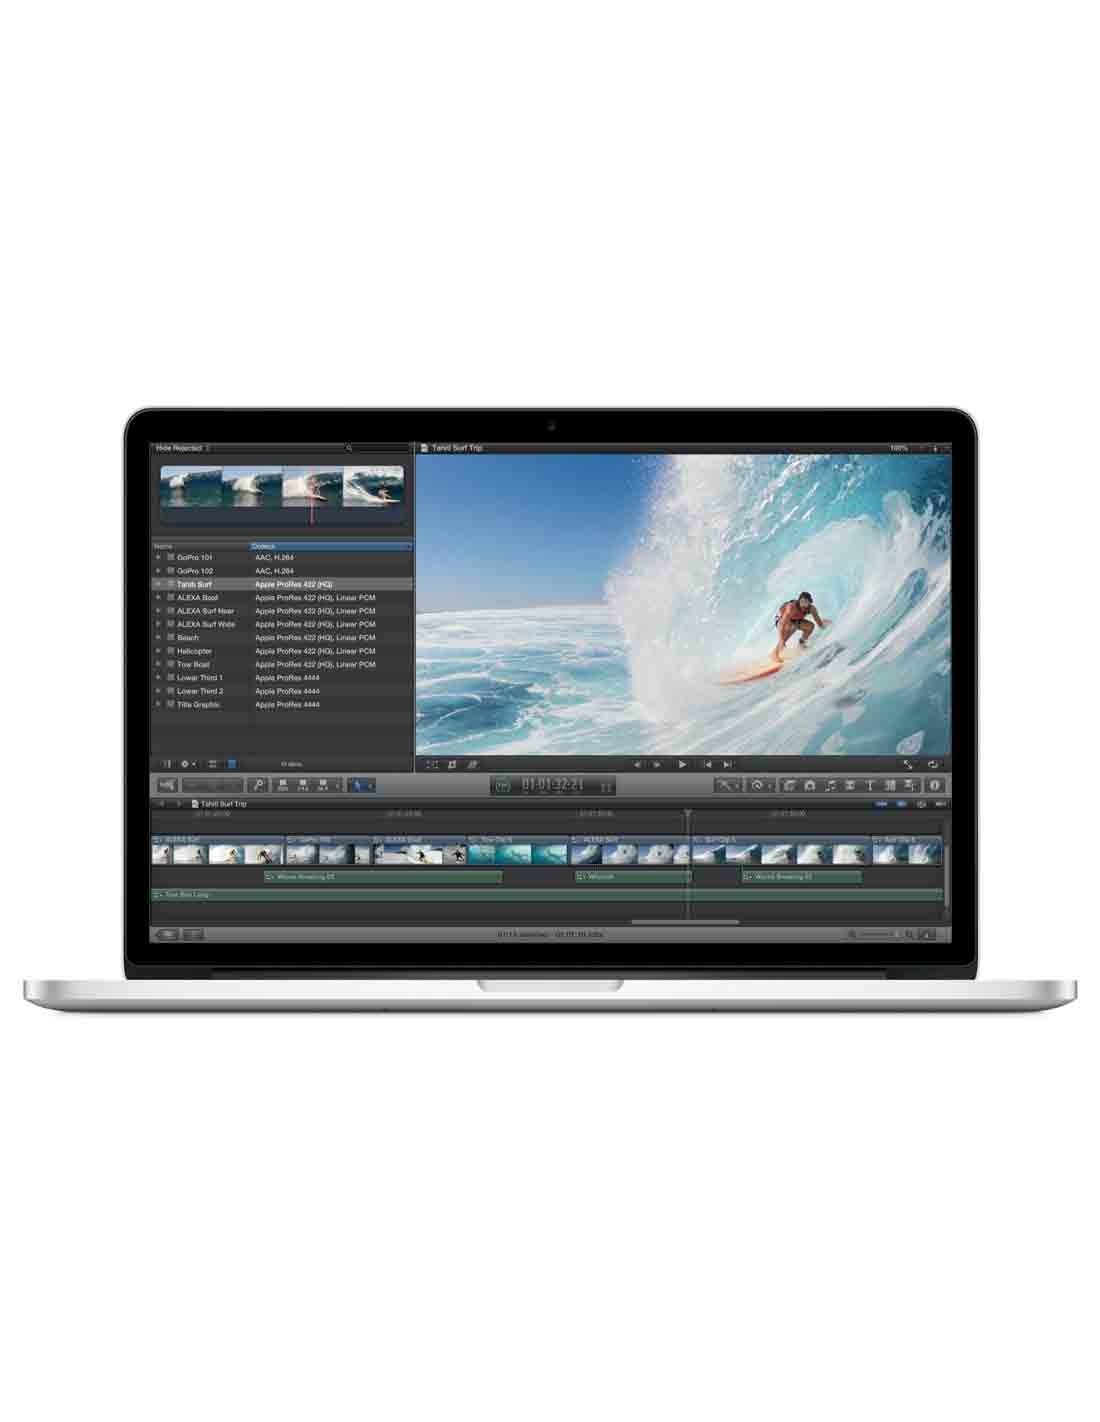 Buy Online Apple MacBook Pro 13-inch Space Gray (2017) in Dubai Computer Store